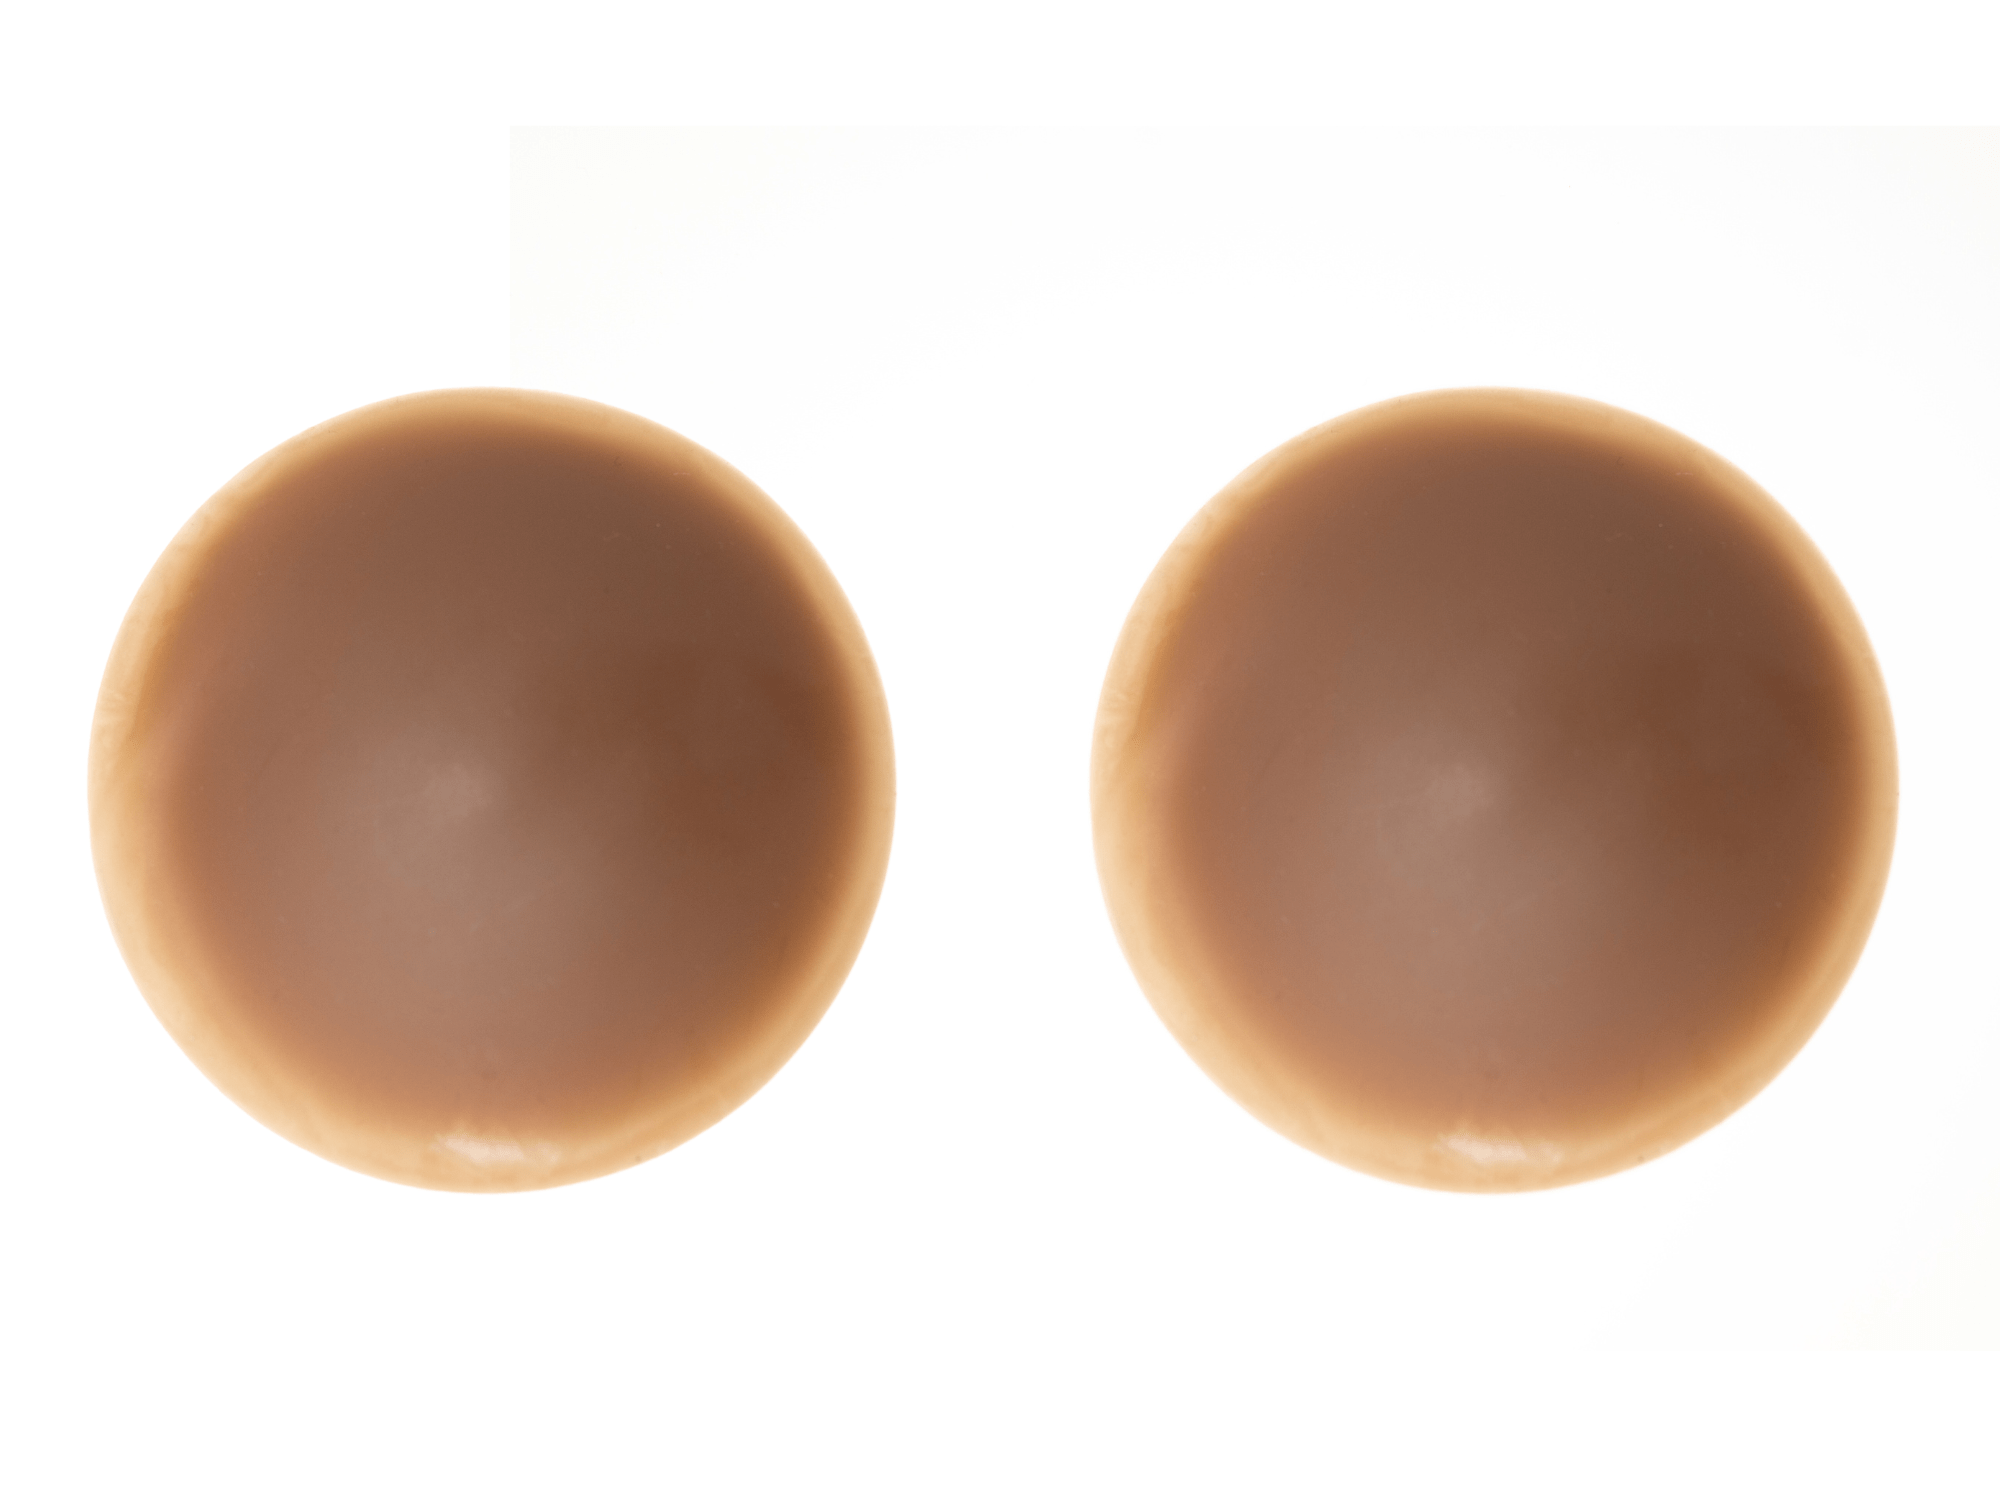 A pair of dark brown nude flesh tone silicone nipple pasties for Black skin.